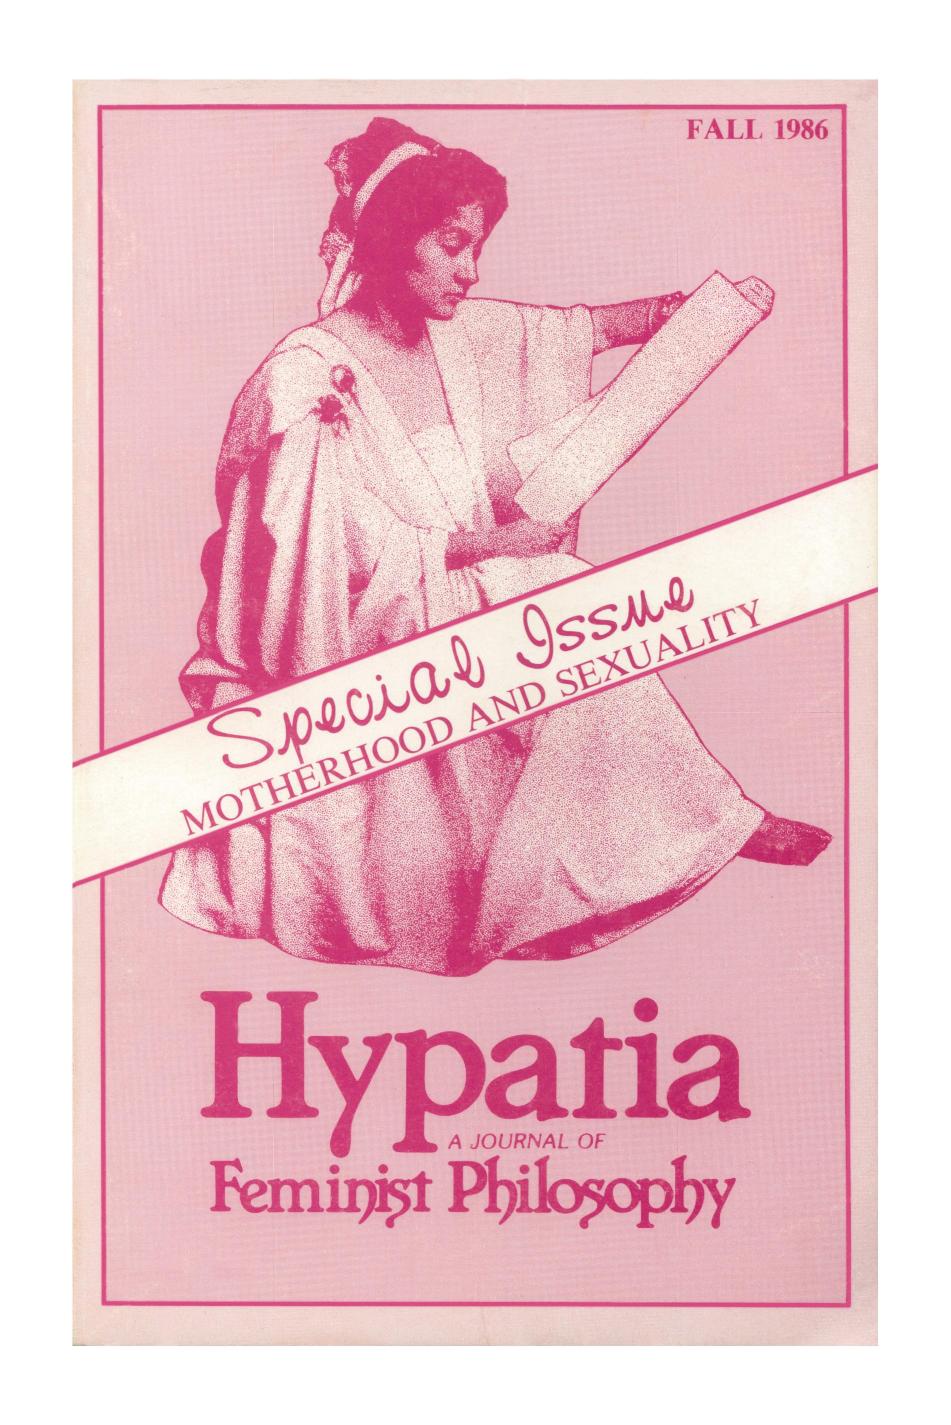 Hypatia A Journal of Feminist Philosophy, Vol. 1, No. 2